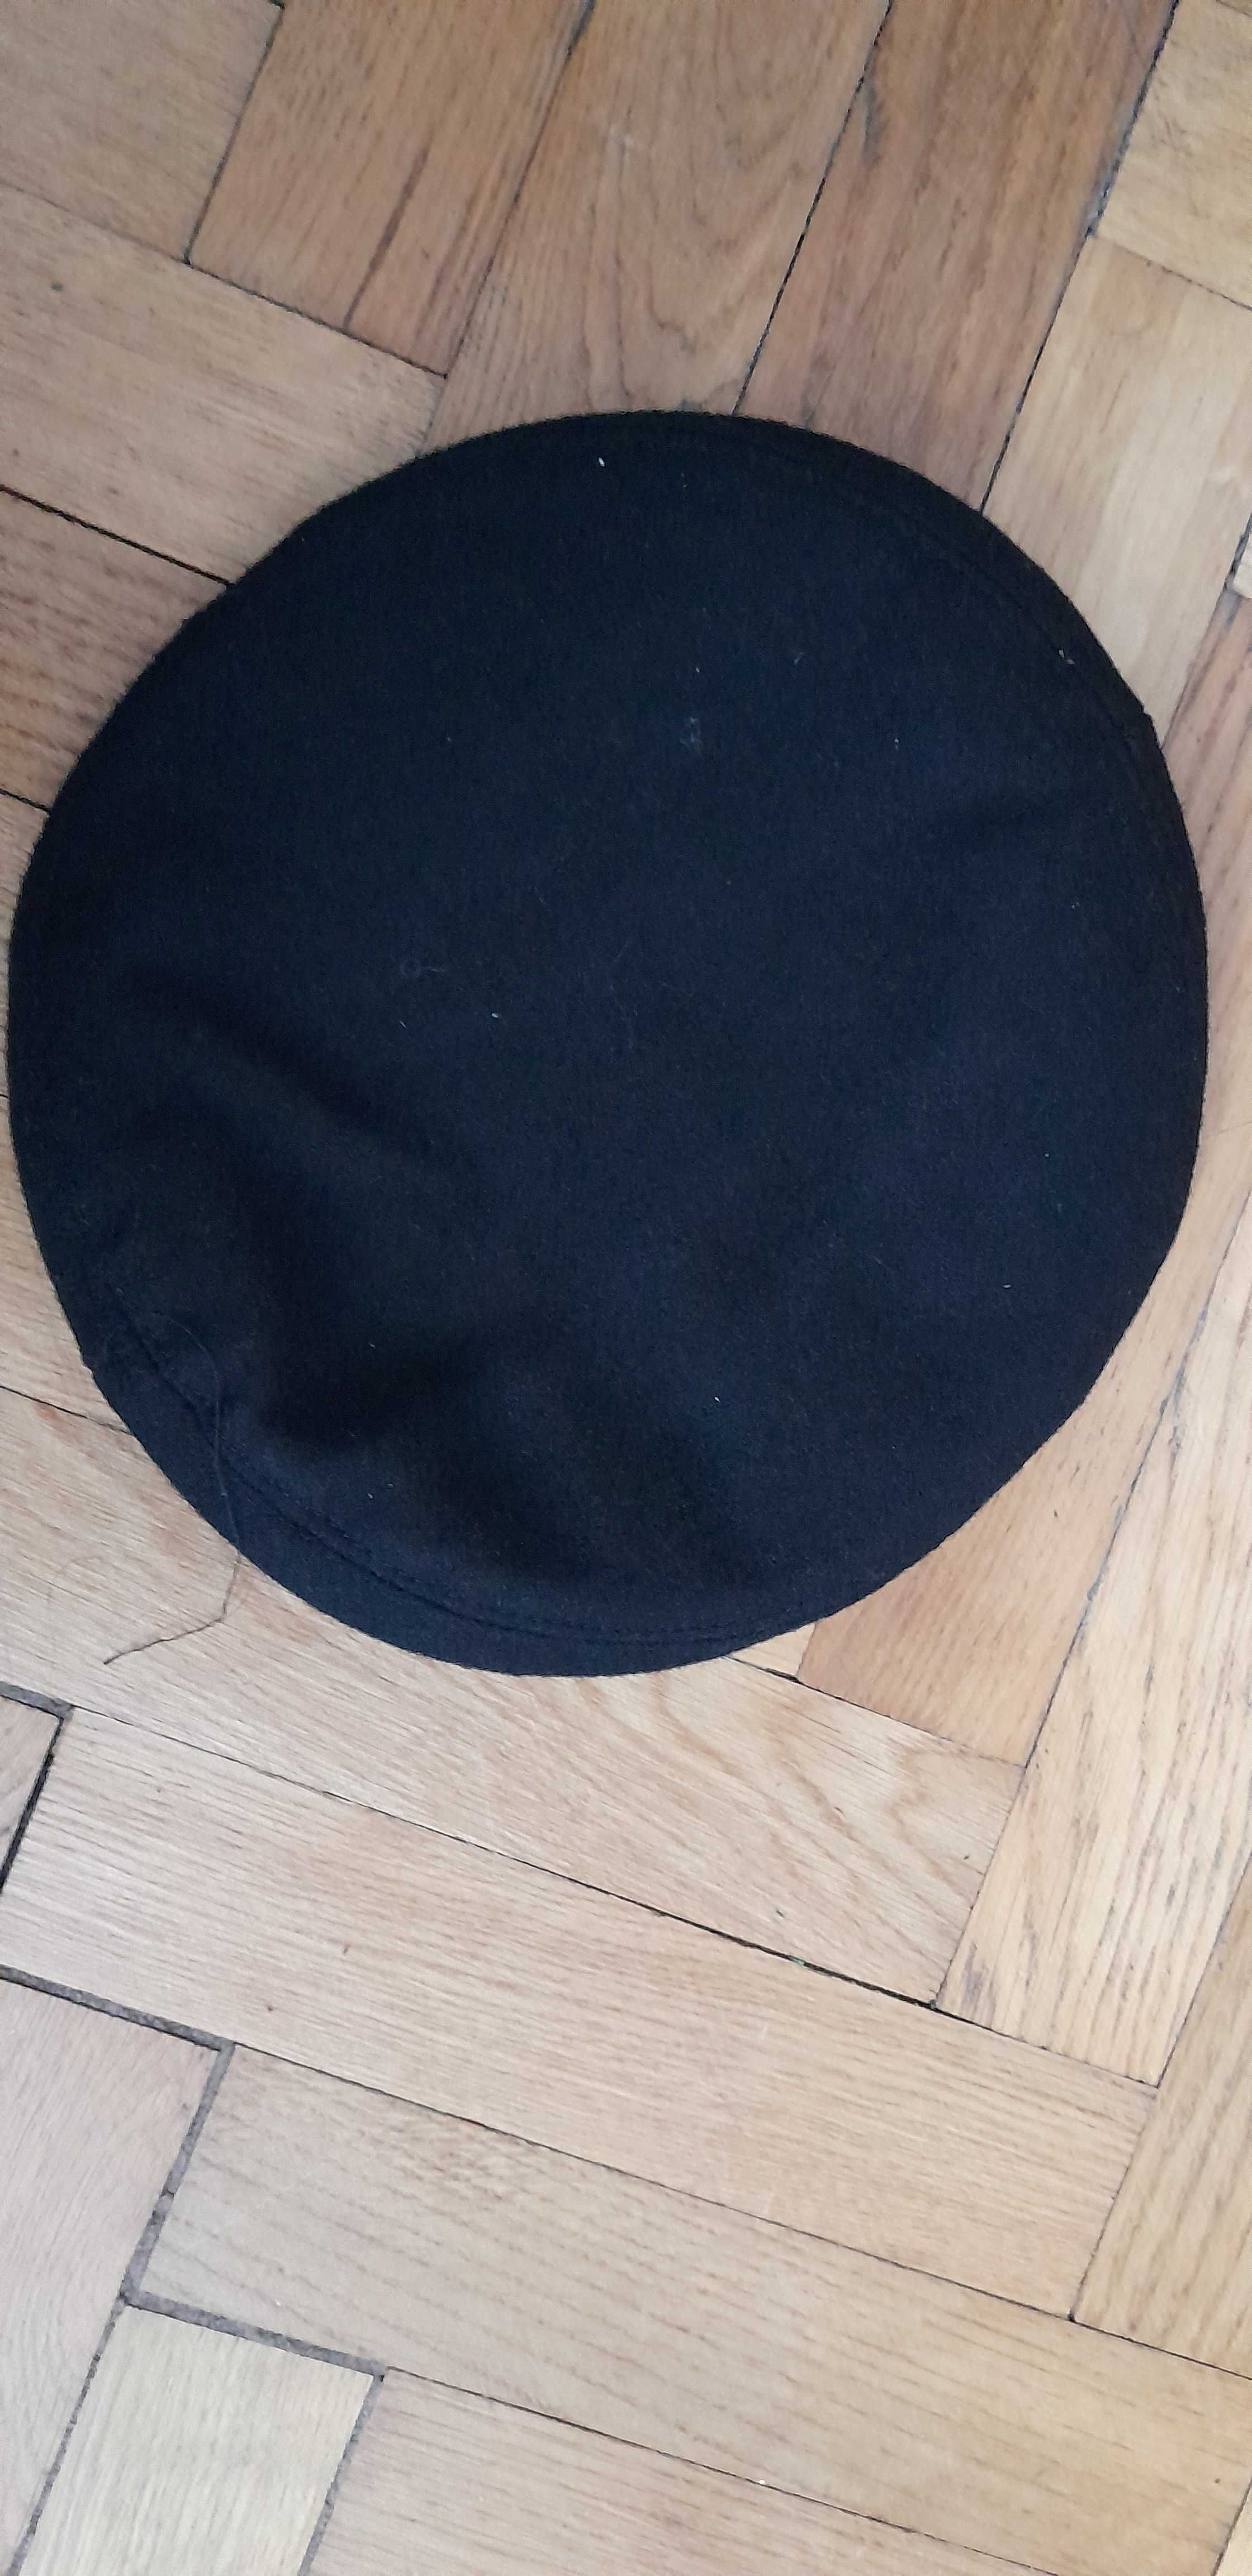 Czarny beret LWP PRL